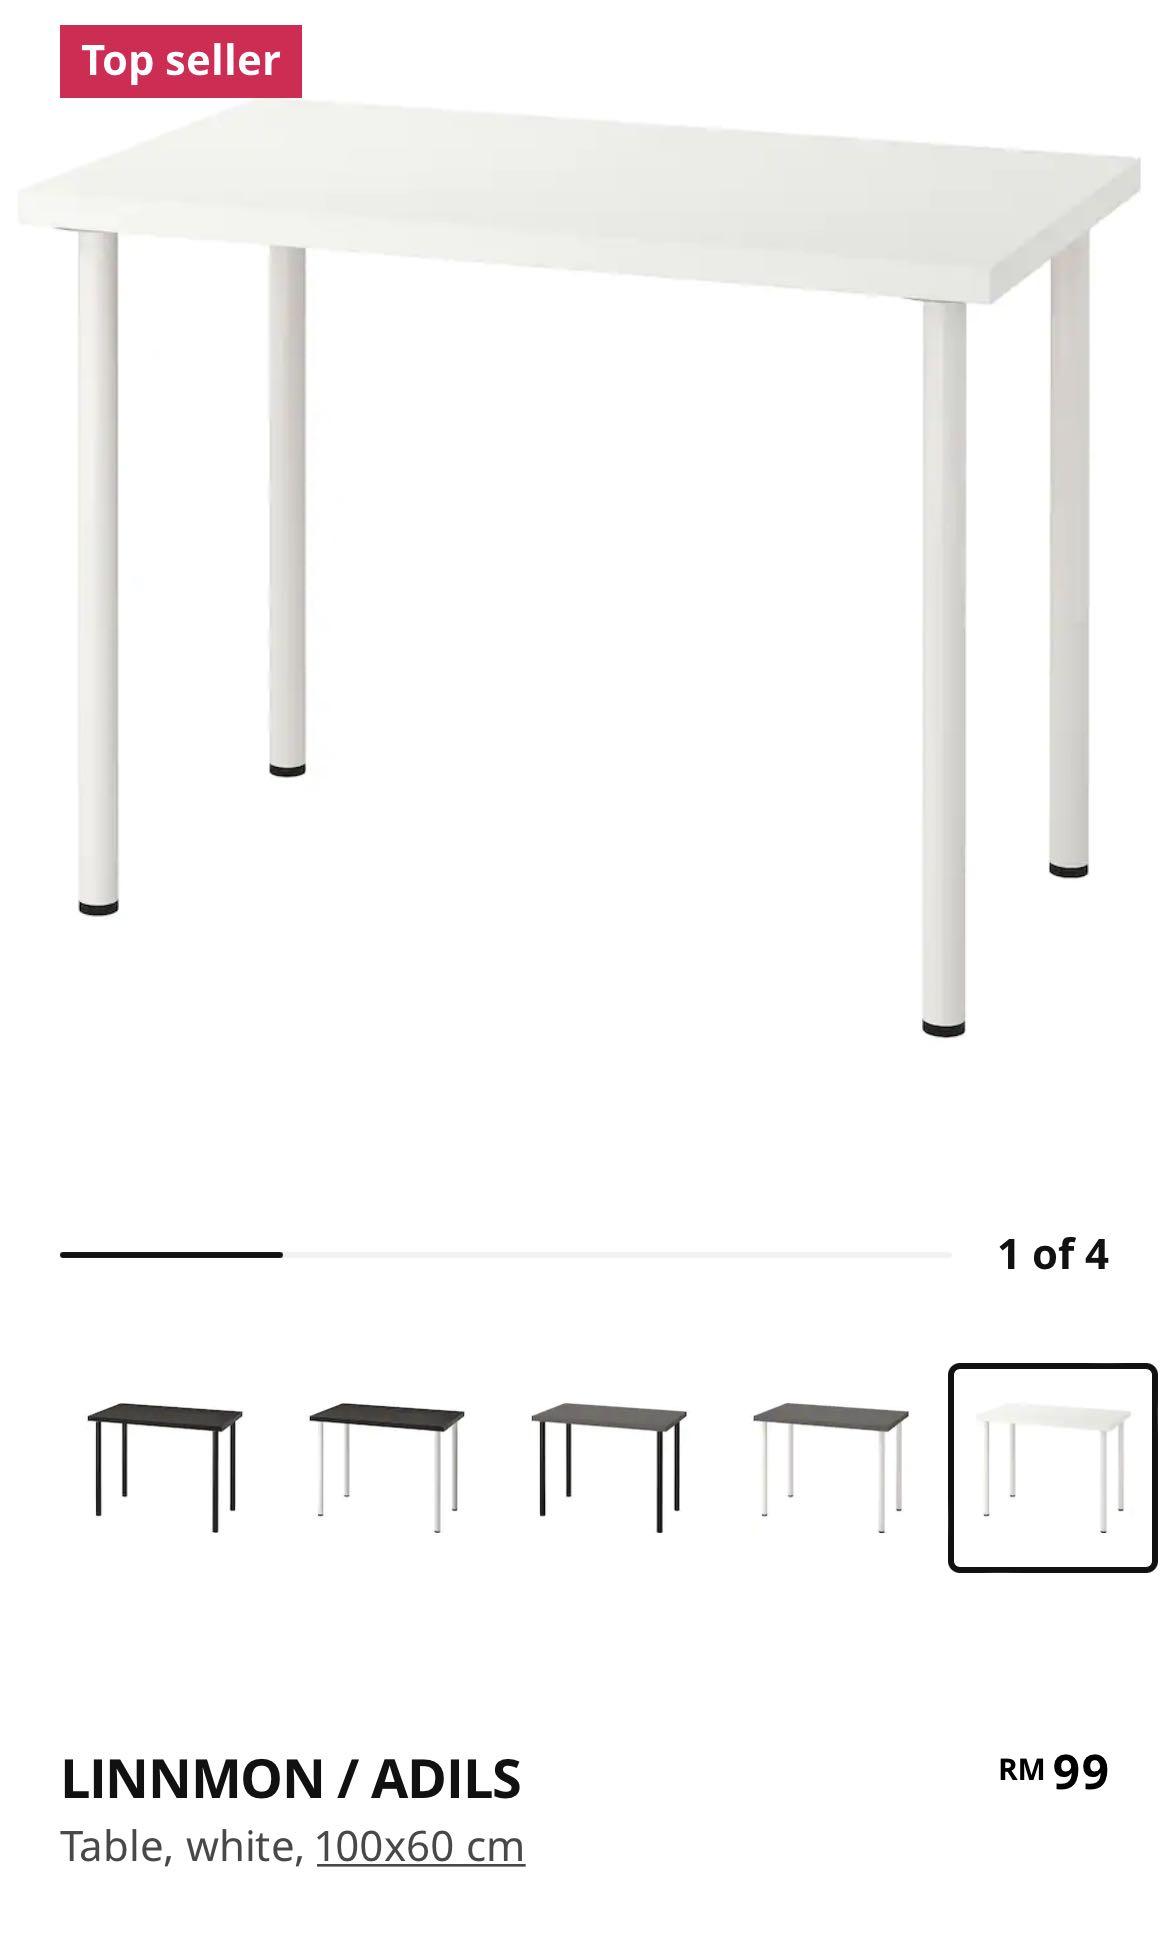 LINNMON Table top - white 100x60 cm